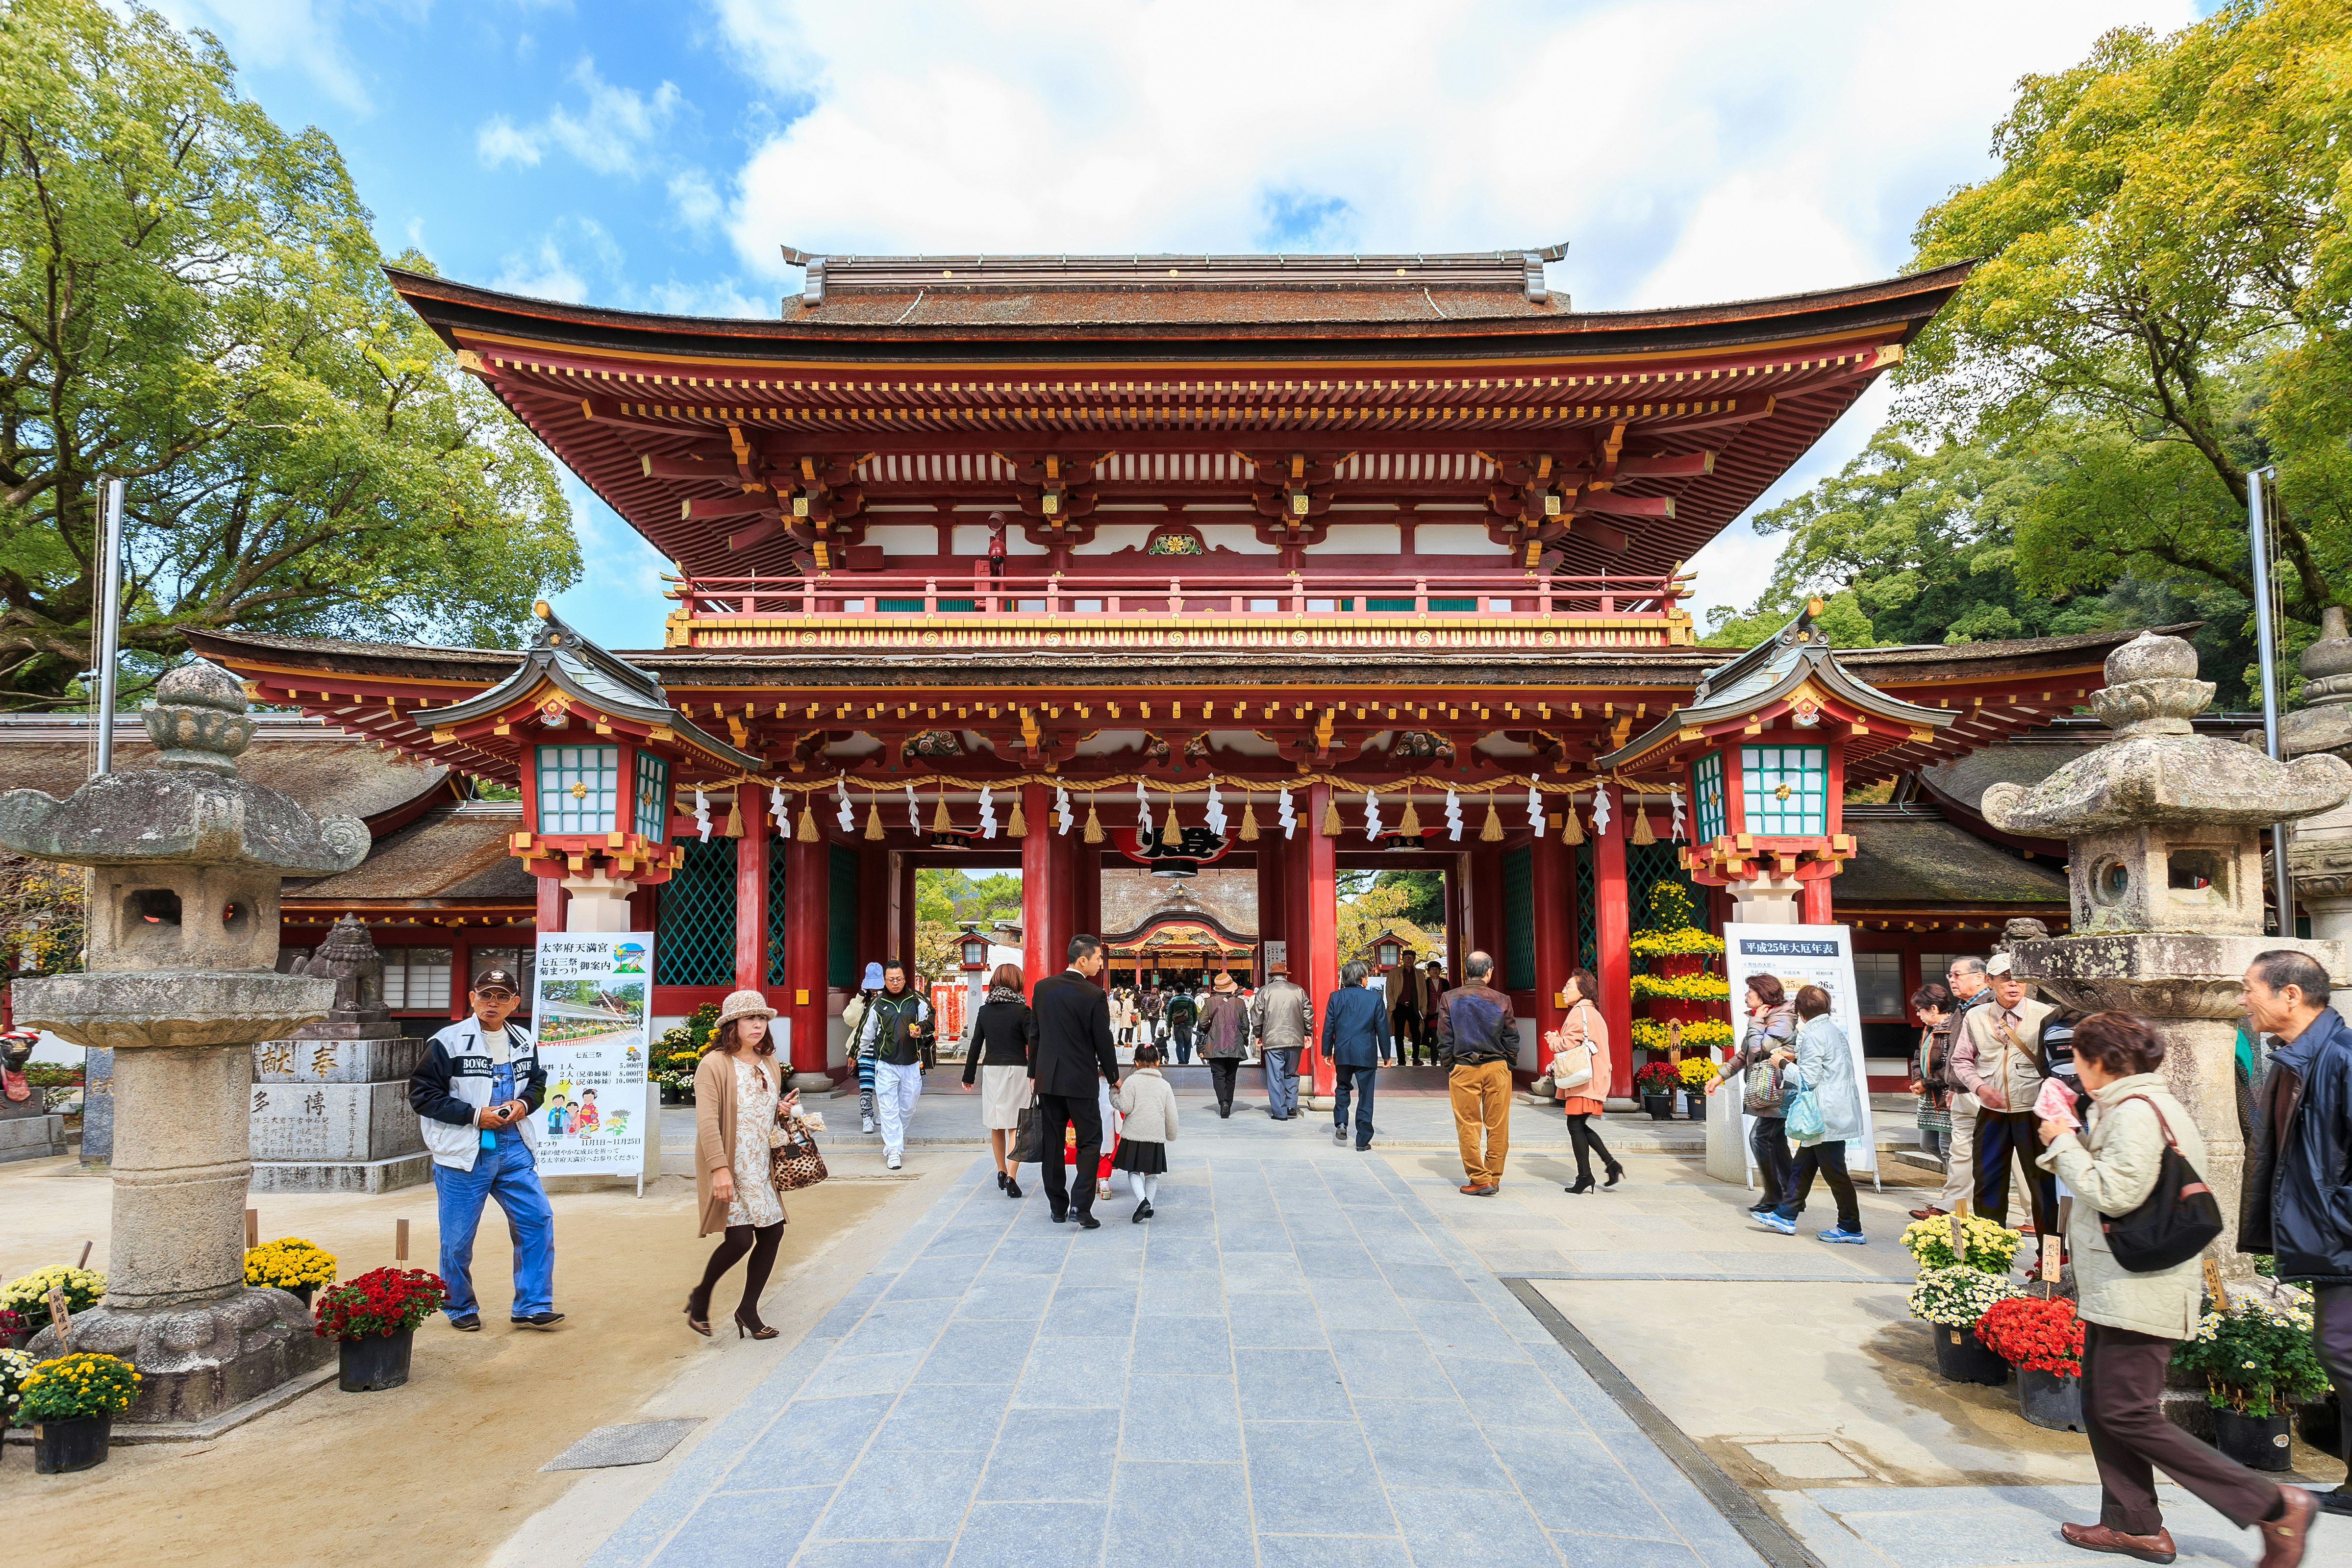 Many visitors walking through the huge, red, decorative entrance to Dazaifu Tenman-gū.